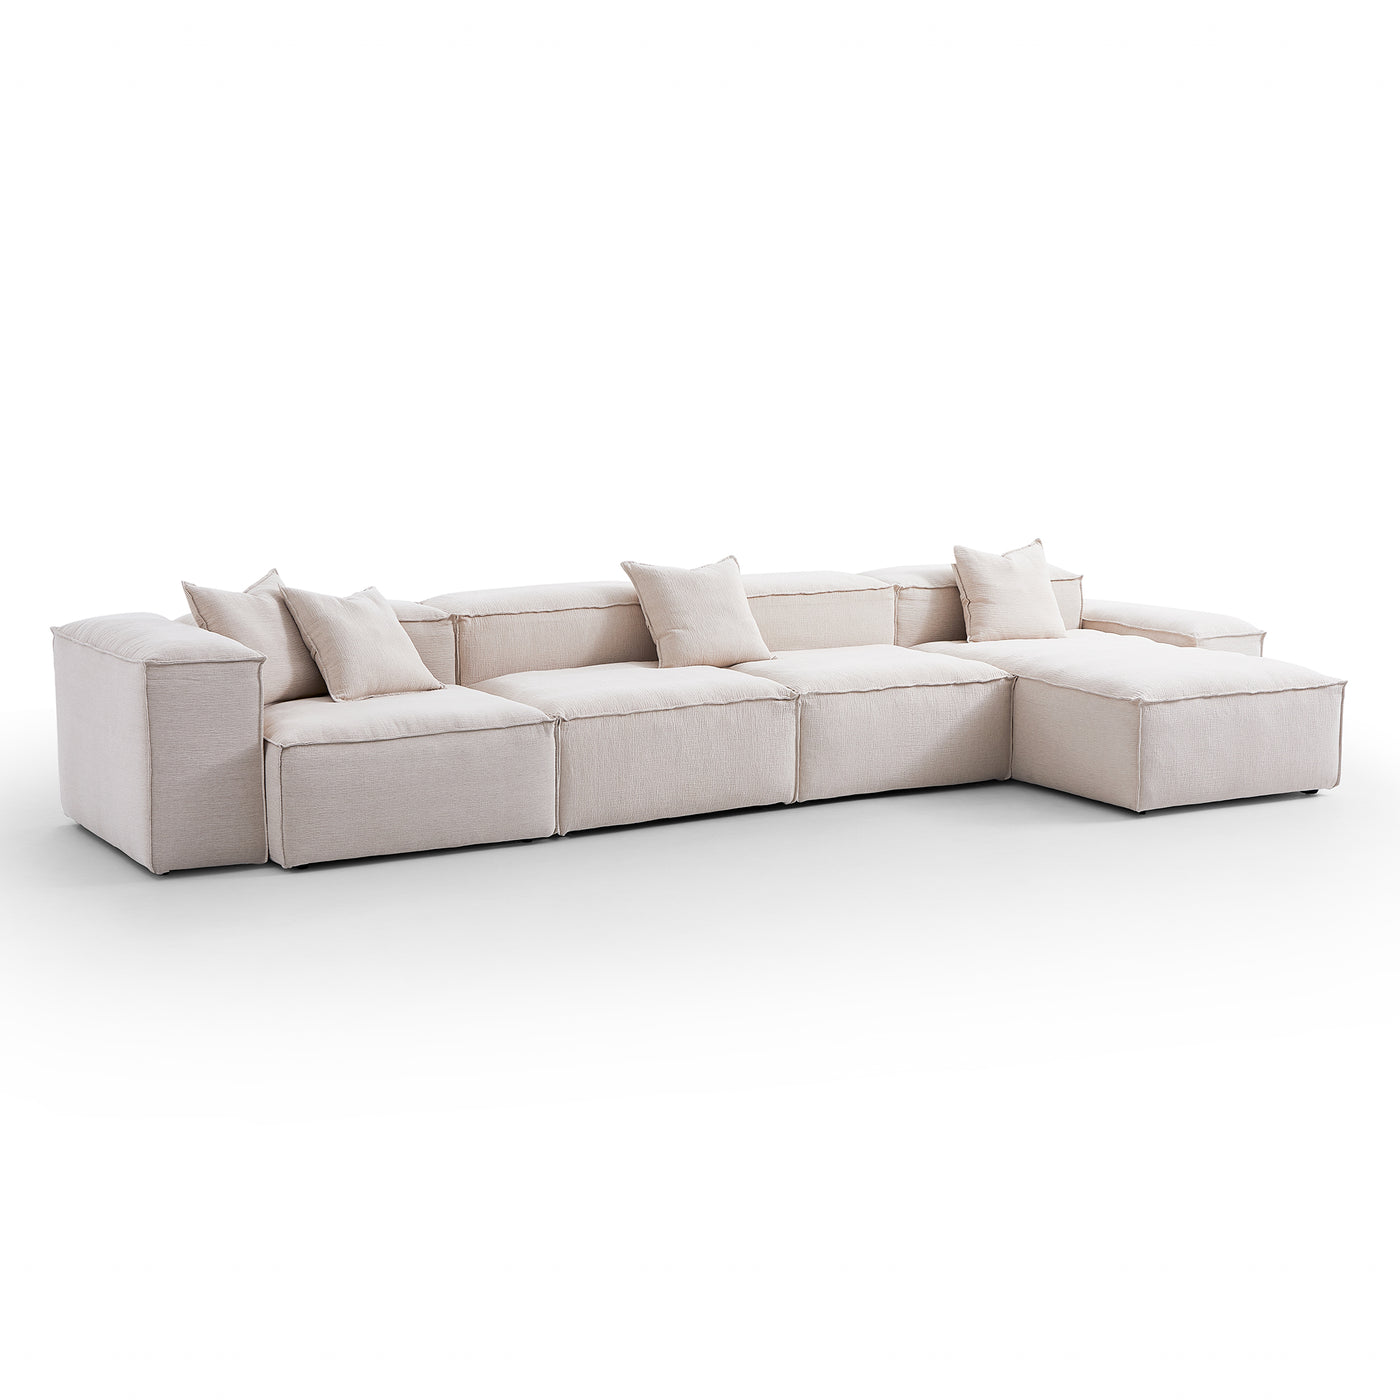 Freedom Modular Khaki Sectional Sofa-Khaki-Low & High-181.1"